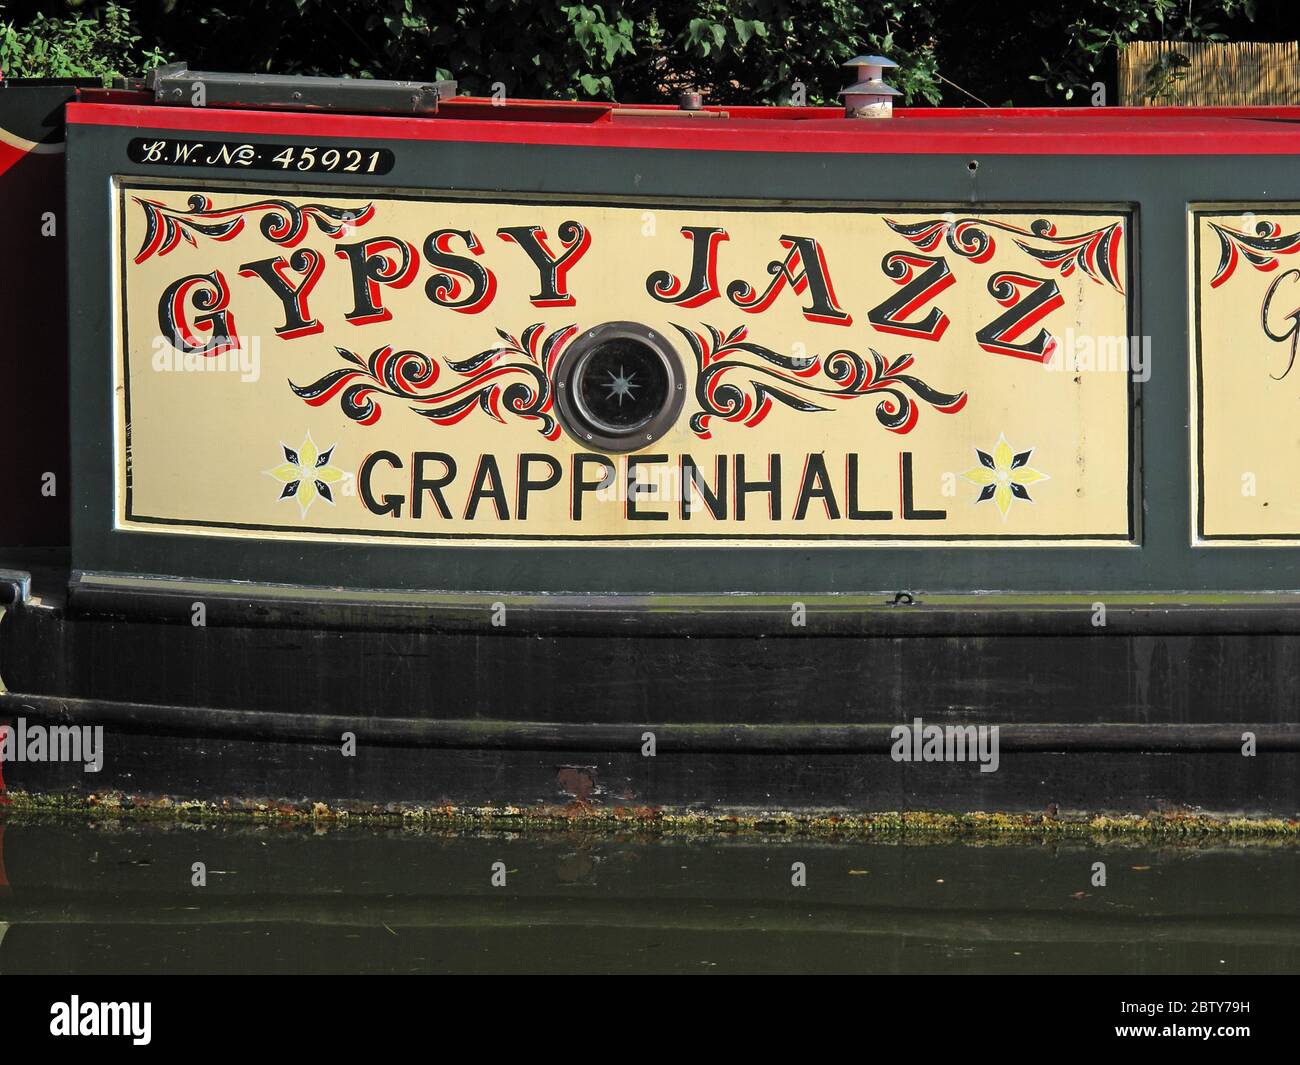 Gypsy Jazz Grappenhall, Bridgewater Canal, Grappenhall, Warrington, Cheshire, North West, England, England, UK, 45921 Stockfoto